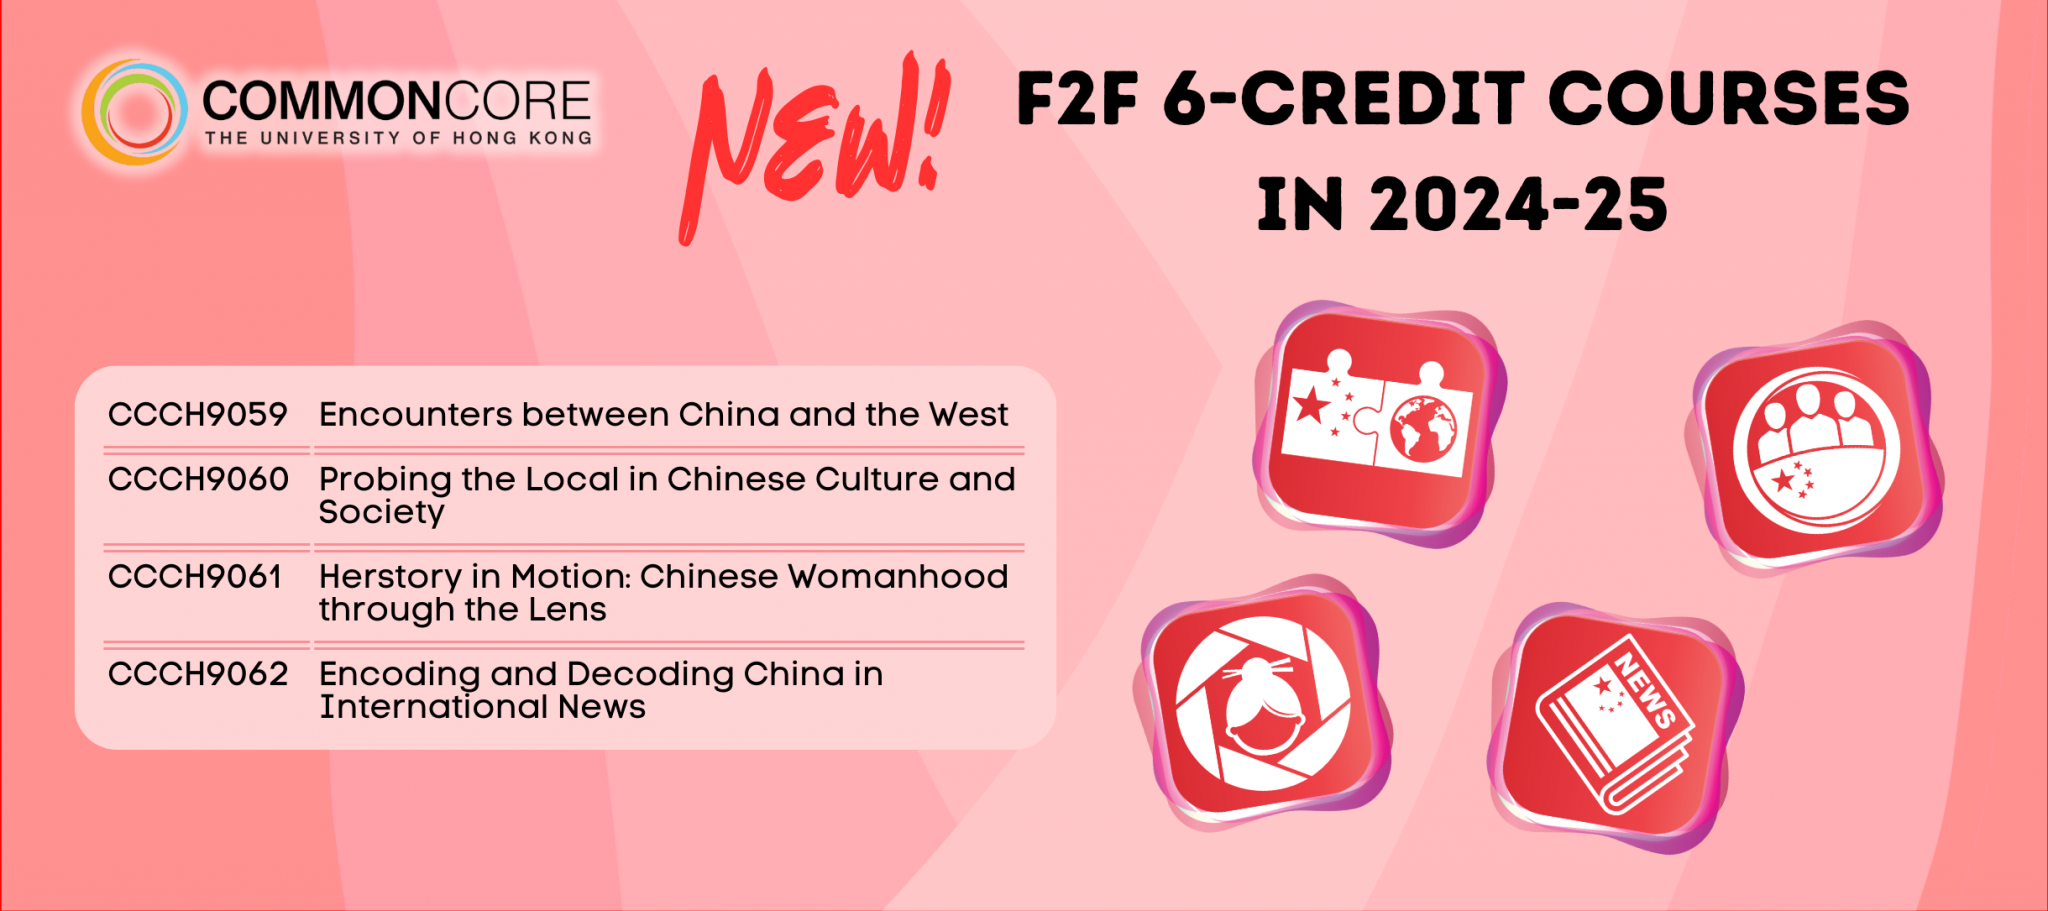 CC_2024-25_CHI_New Courses